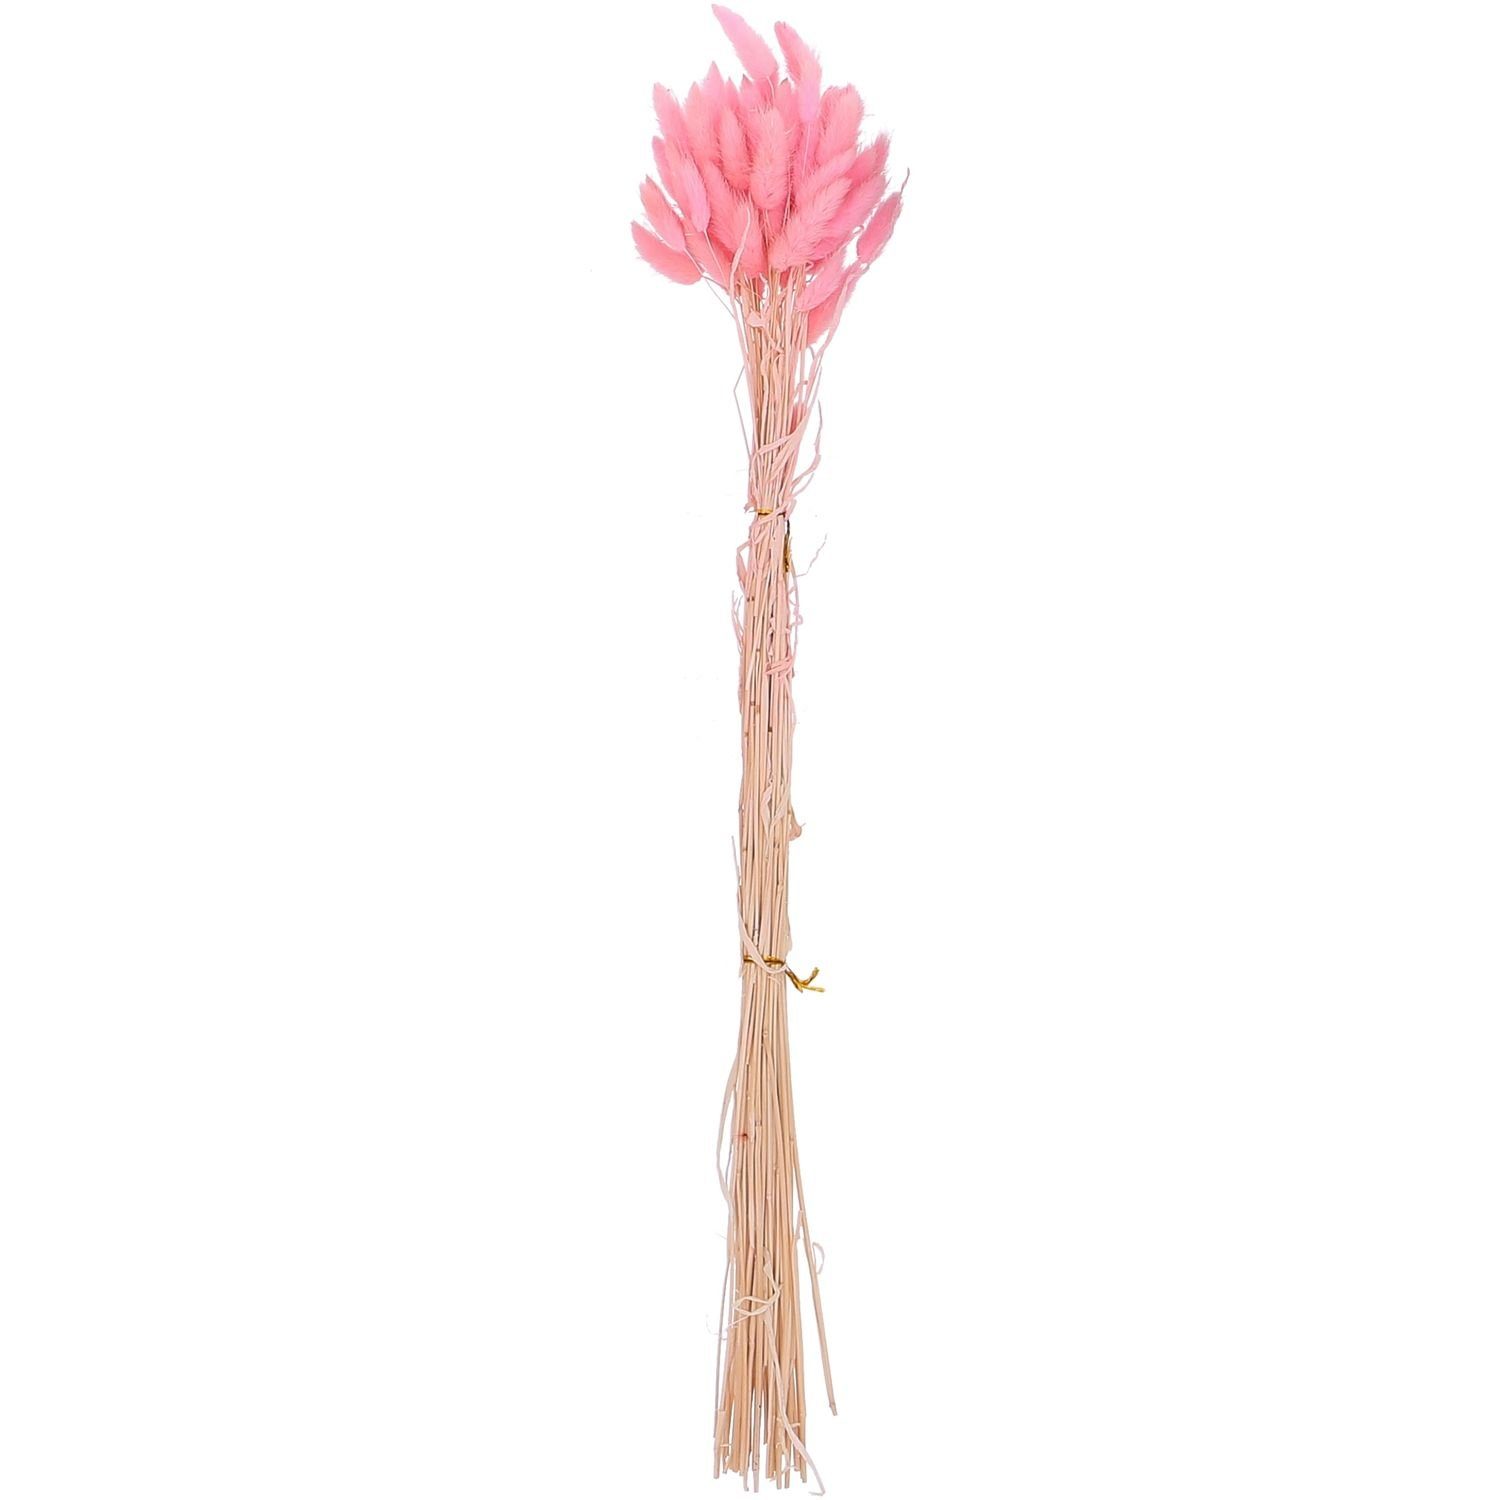 Trockenblume Lagurus kurz - Bund/50 Stück - Länge ca. 50-60 cm - rosa, Vosteen